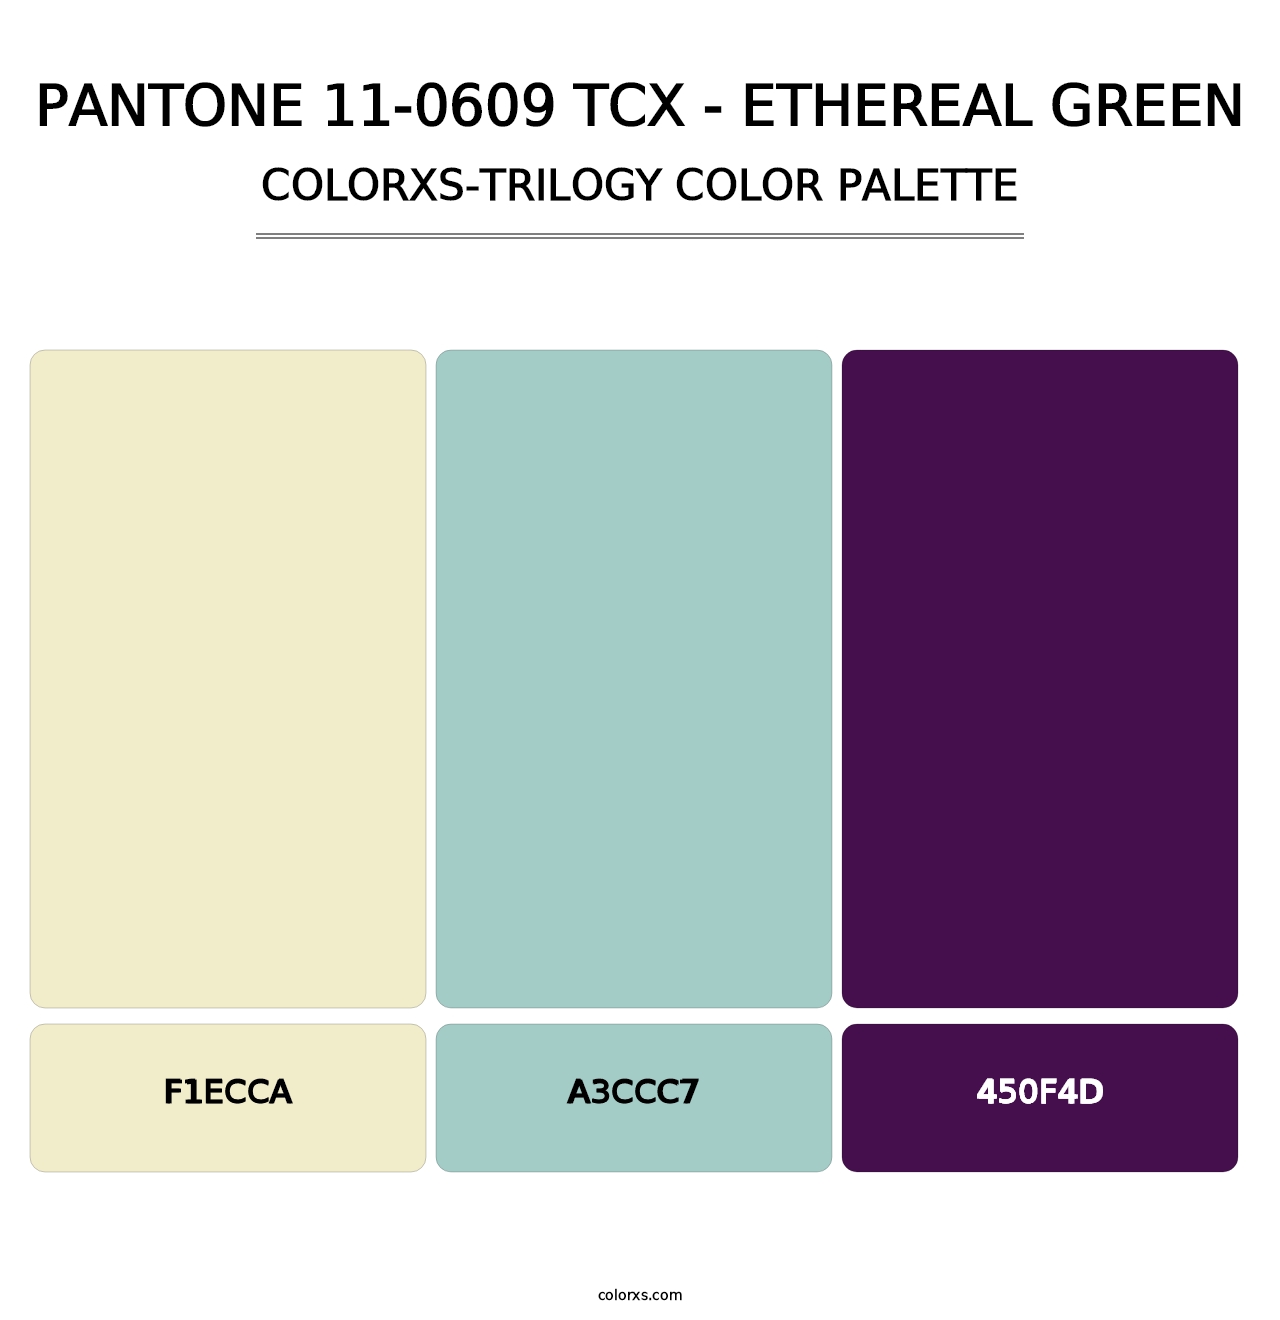 PANTONE 11-0609 TCX - Ethereal Green - Colorxs Trilogy Palette